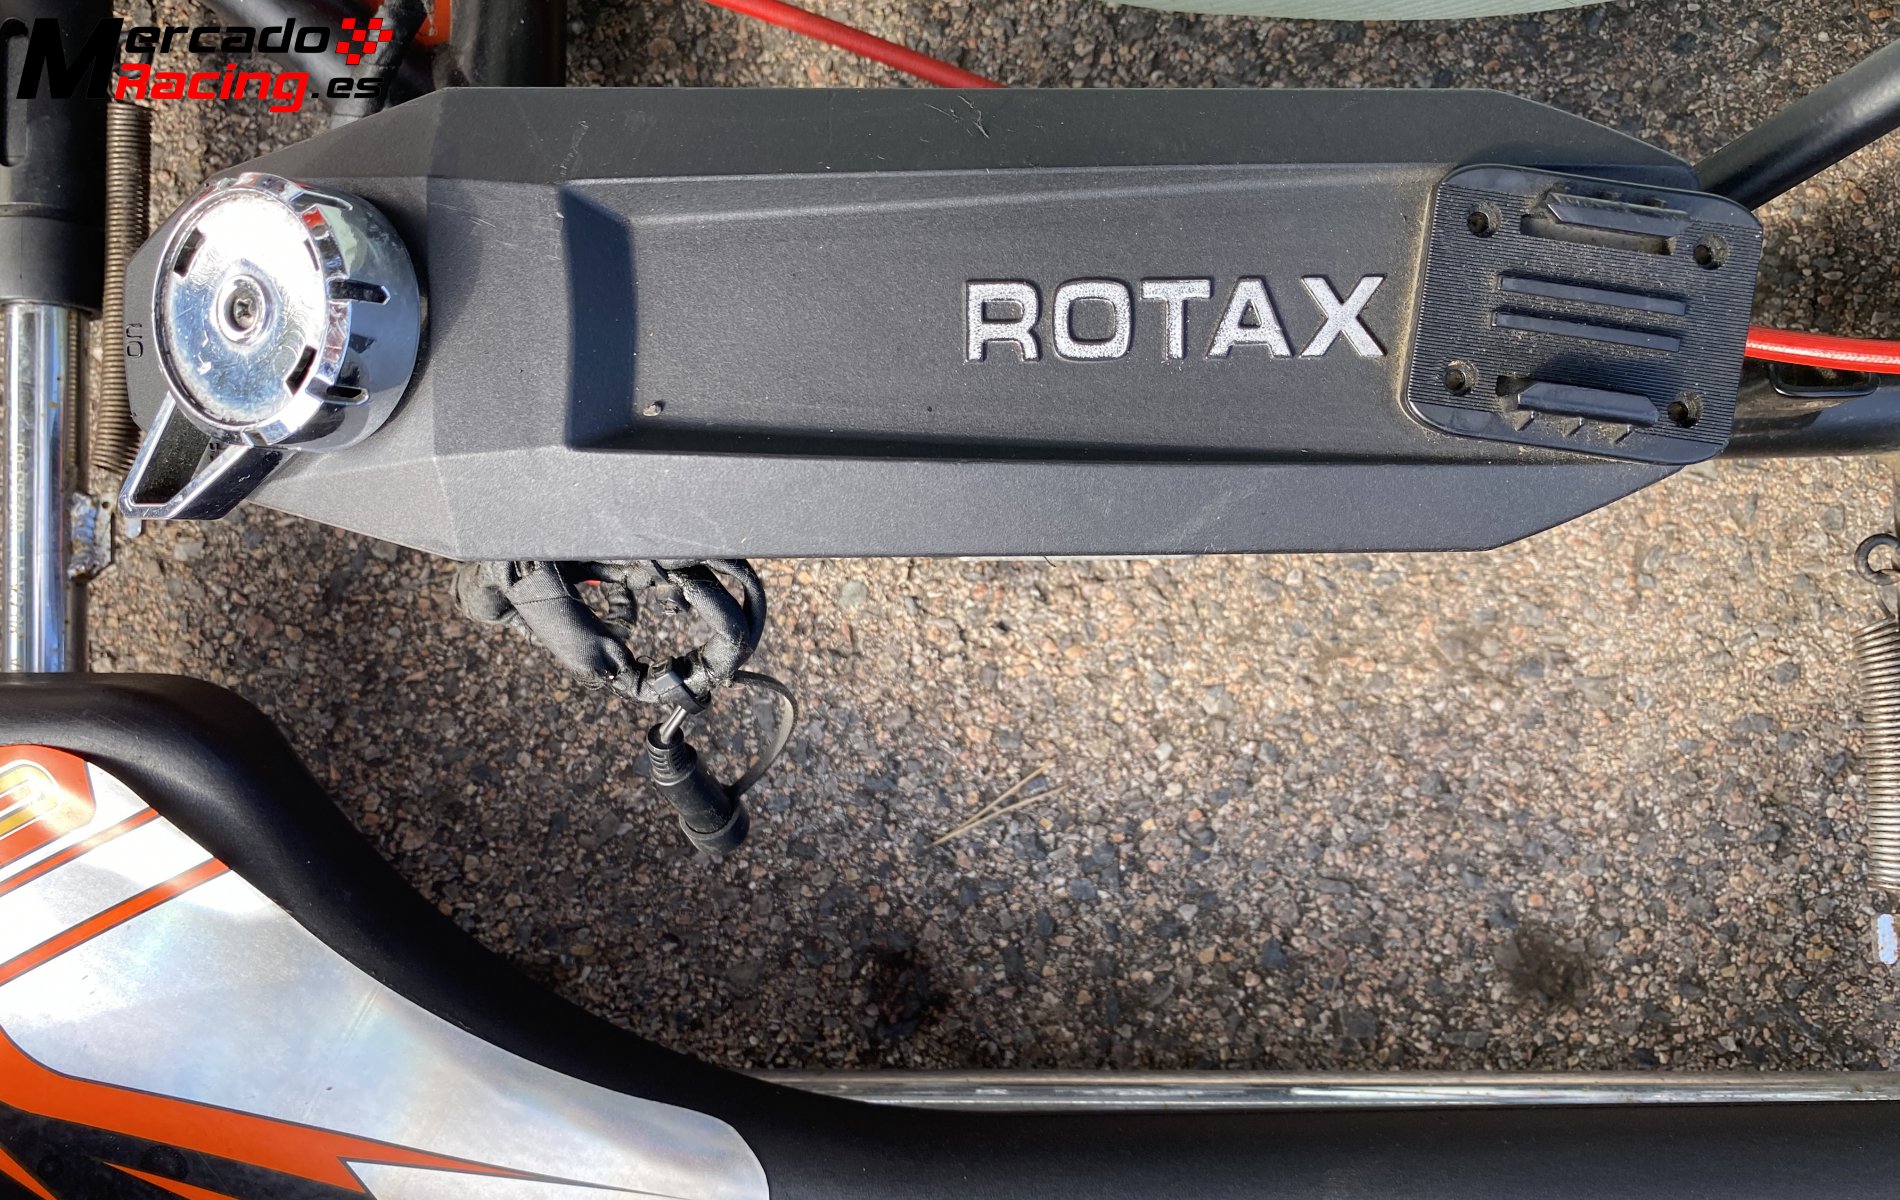 Vendo kart crg kt2 rotax max 125cc automático ,año octubre 2019